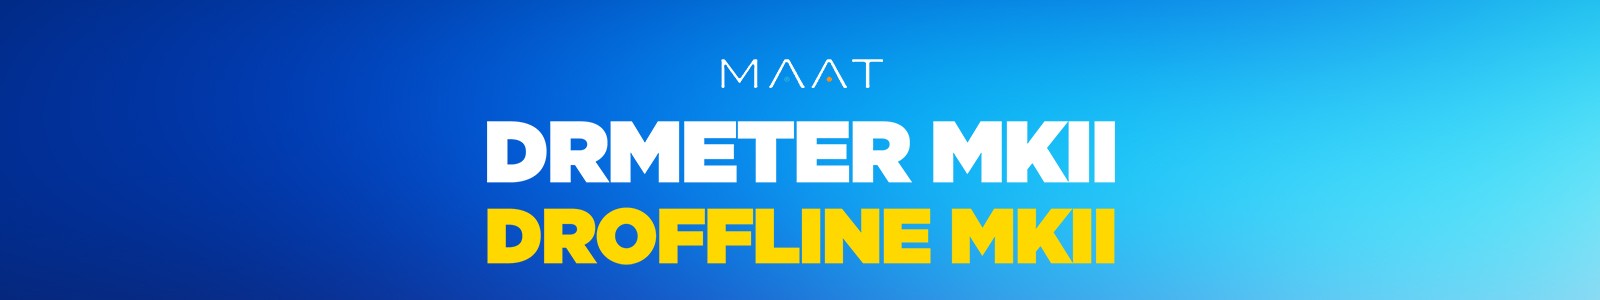 DRMeter MKII + DROffline MKII by MAAT GMbH